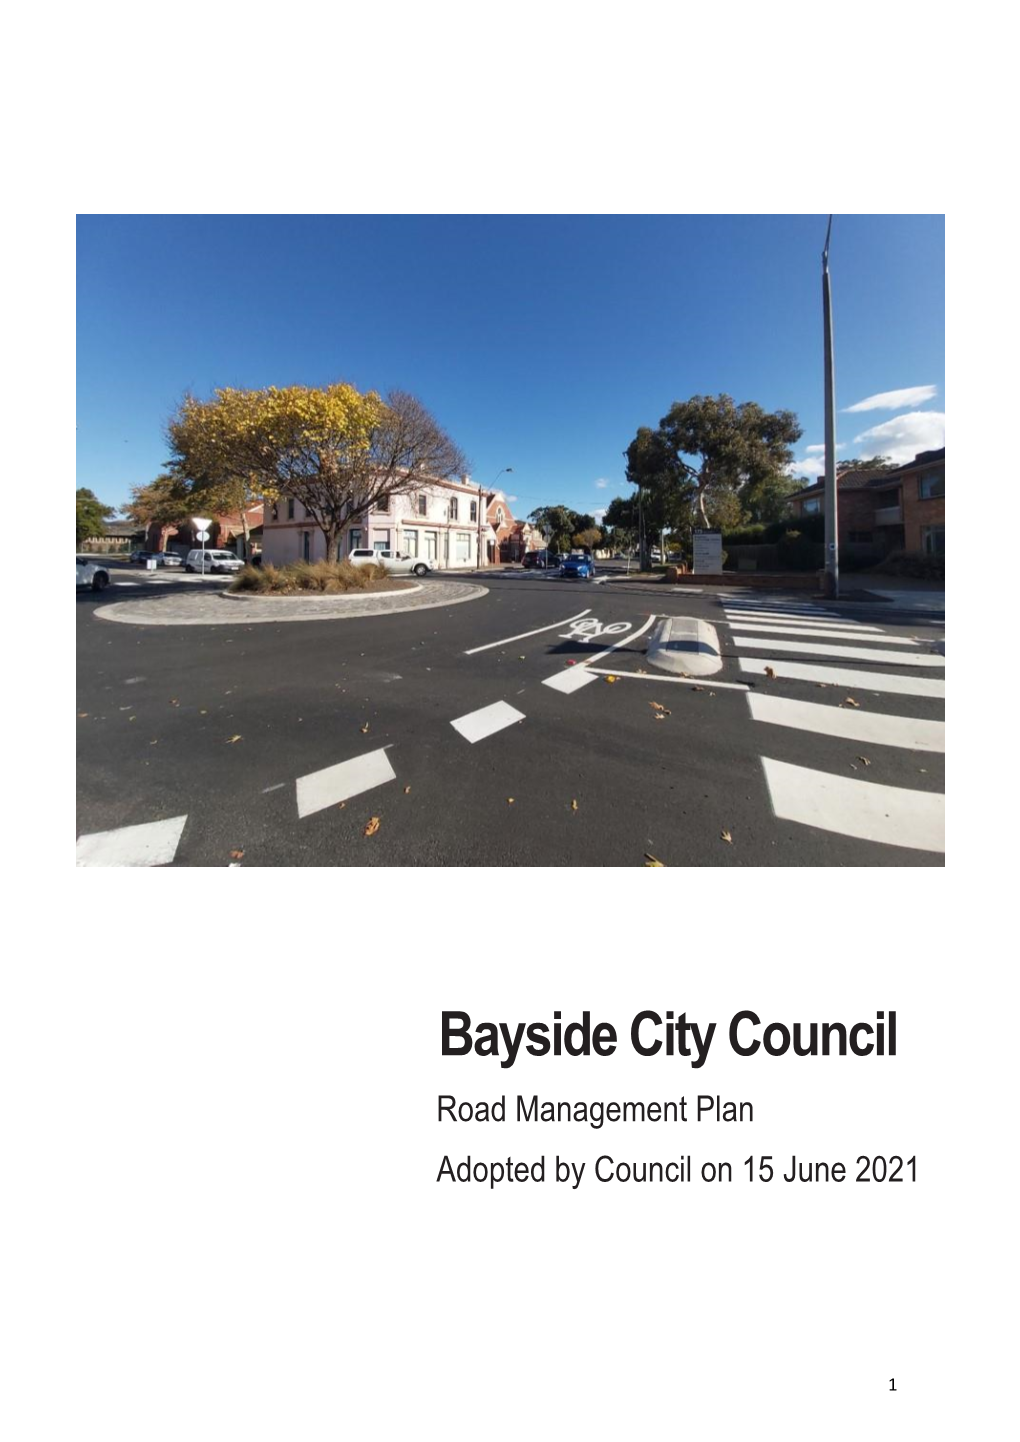 Bayside Road Management Plan